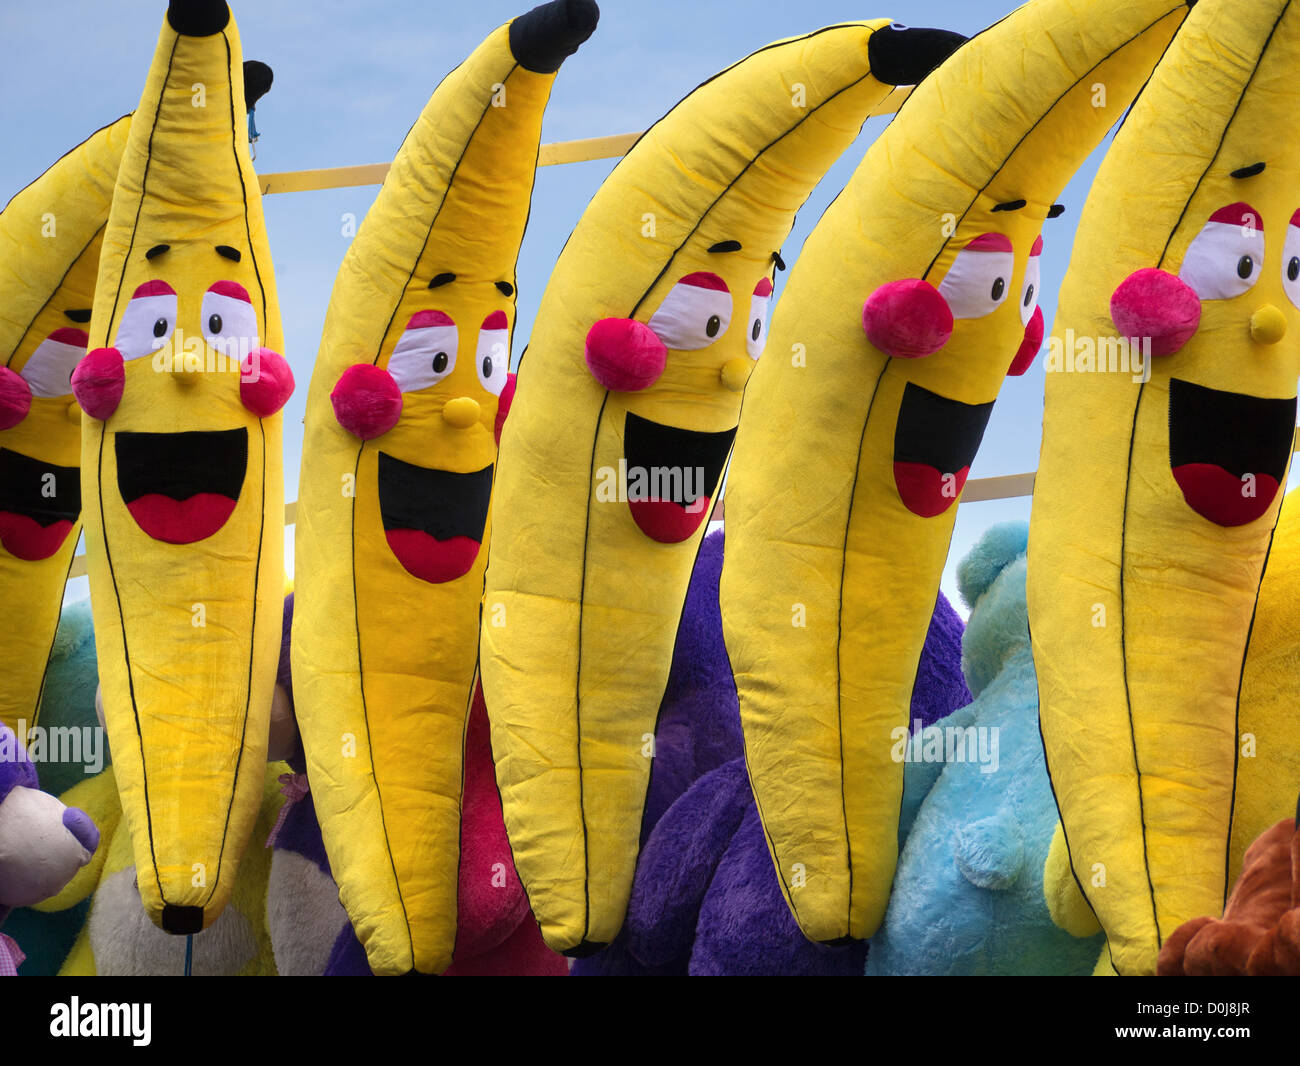 Daft bananas at Abingdon Street Fair. Stock Photo